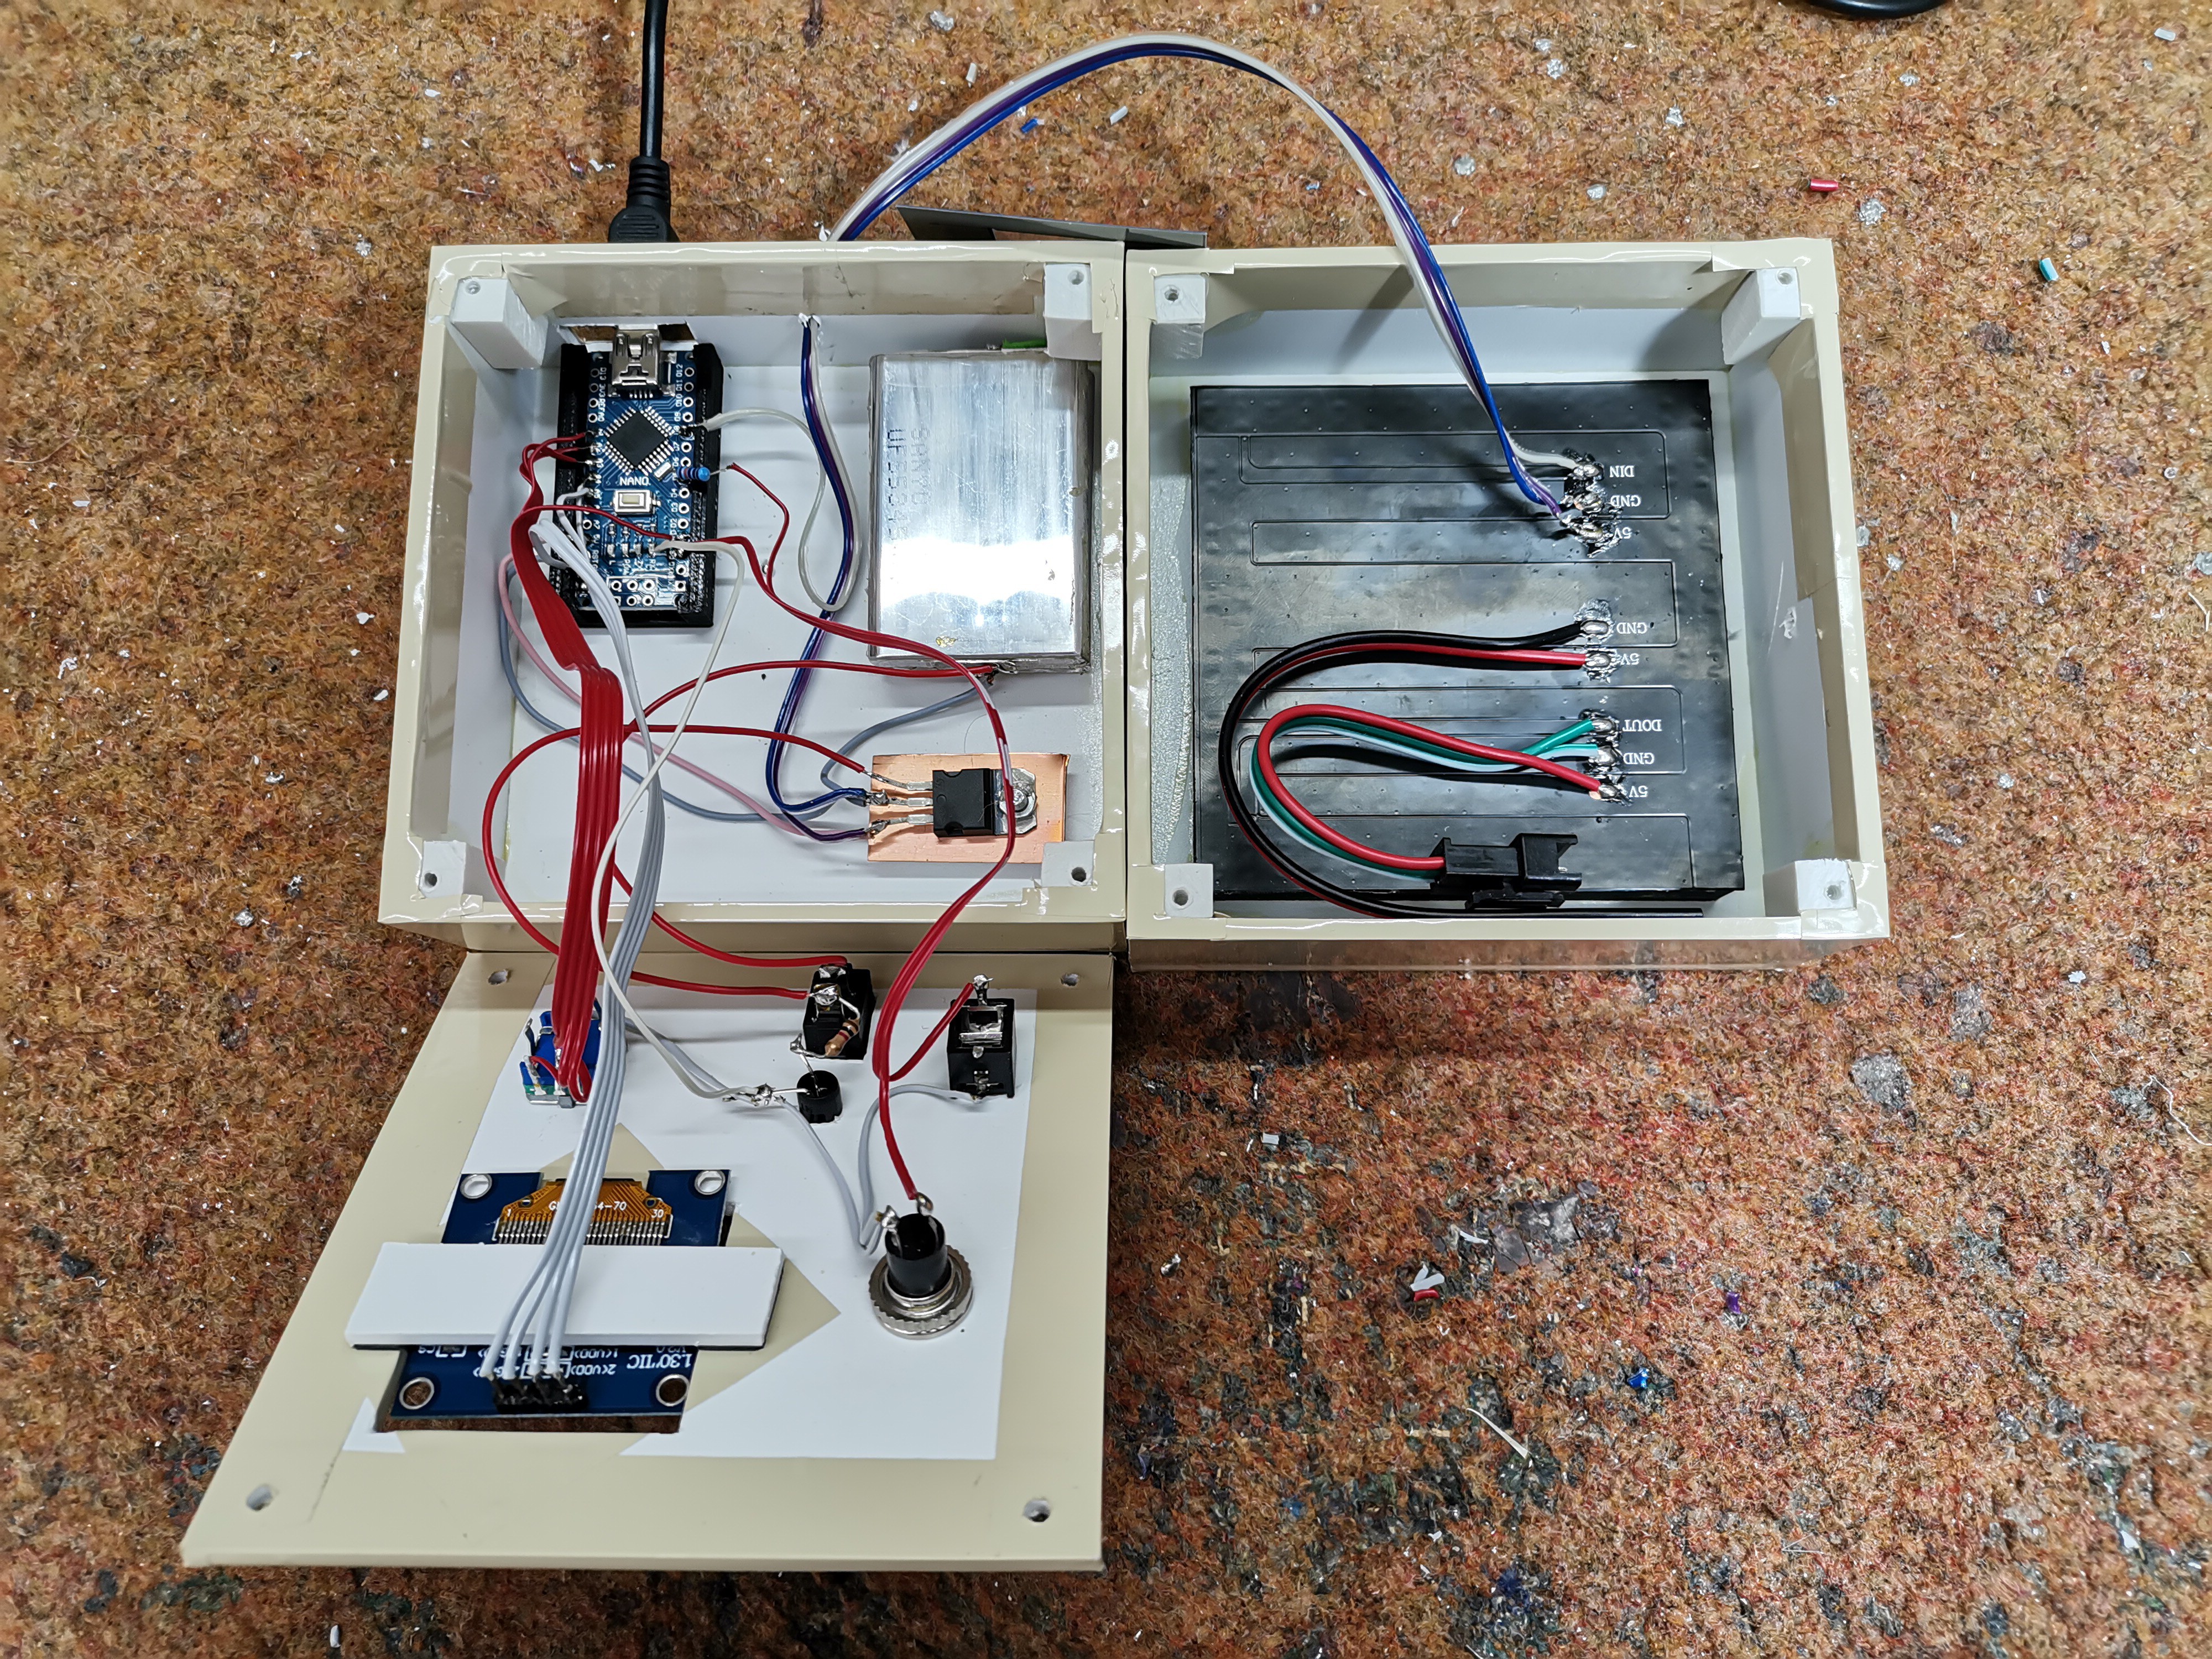 Simple Arduino based Bioresonance Therapy device, RIFE Machine